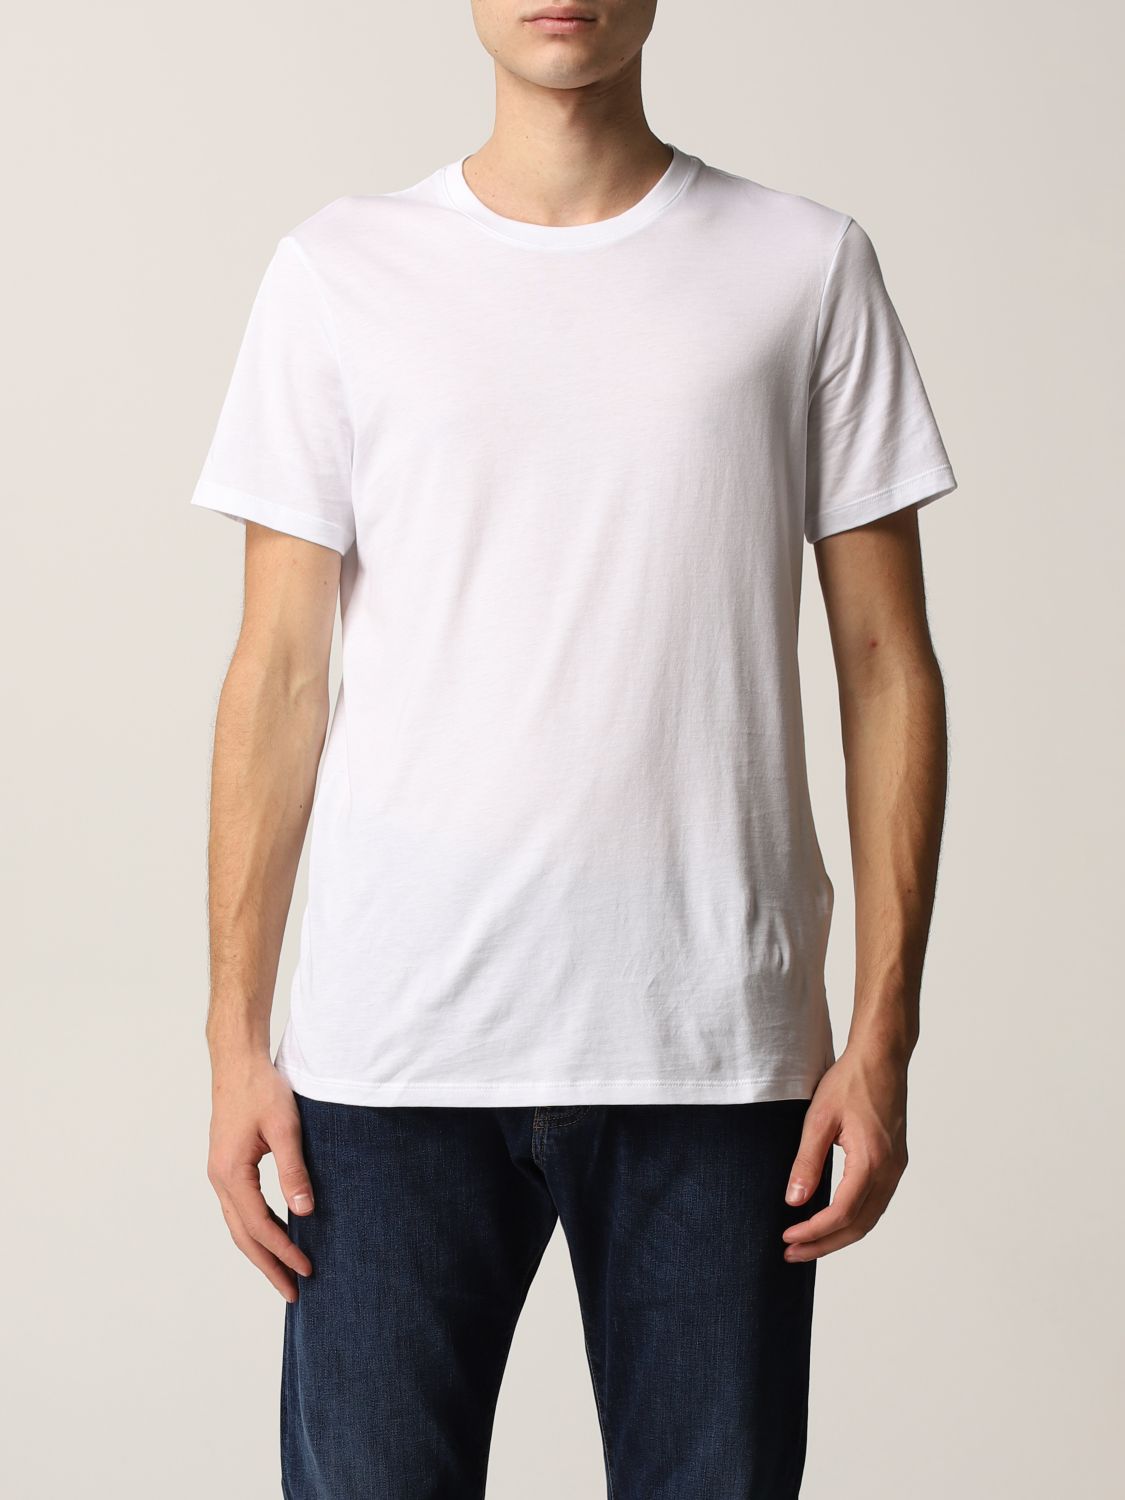 ARMANI EXCHANGE: T-shirt in cotton jersey - White | Armani Exchange t ...